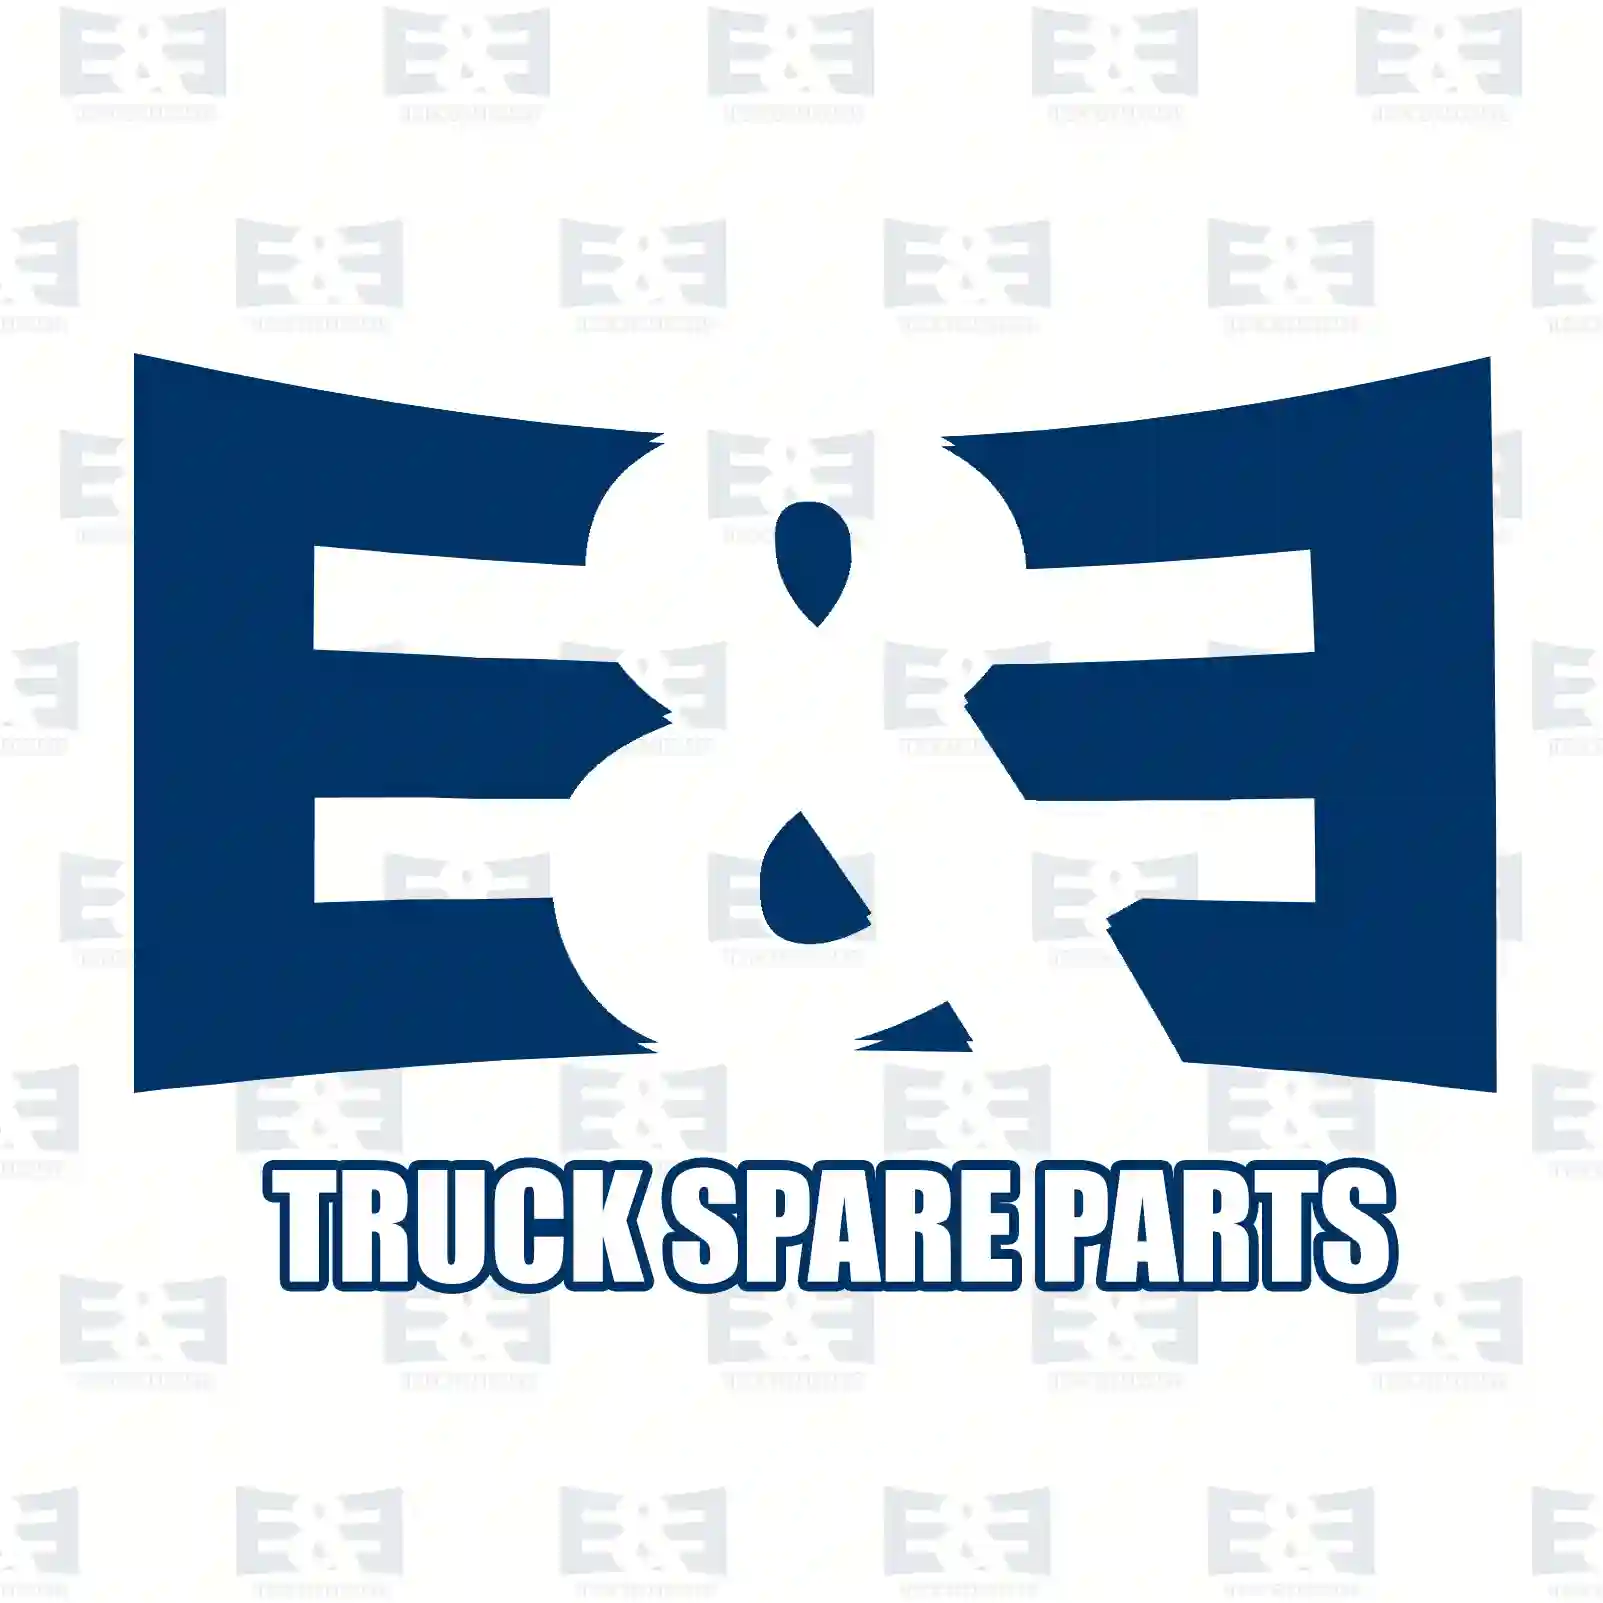 Brake drum, 2E2293741, 5021138663, 21021114, 21021114A, 21021114AV, , , ||  2E2293741 E&E Truck Spare Parts | Truck Spare Parts, Auotomotive Spare Parts Brake drum, 2E2293741, 5021138663, 21021114, 21021114A, 21021114AV, , , ||  2E2293741 E&E Truck Spare Parts | Truck Spare Parts, Auotomotive Spare Parts